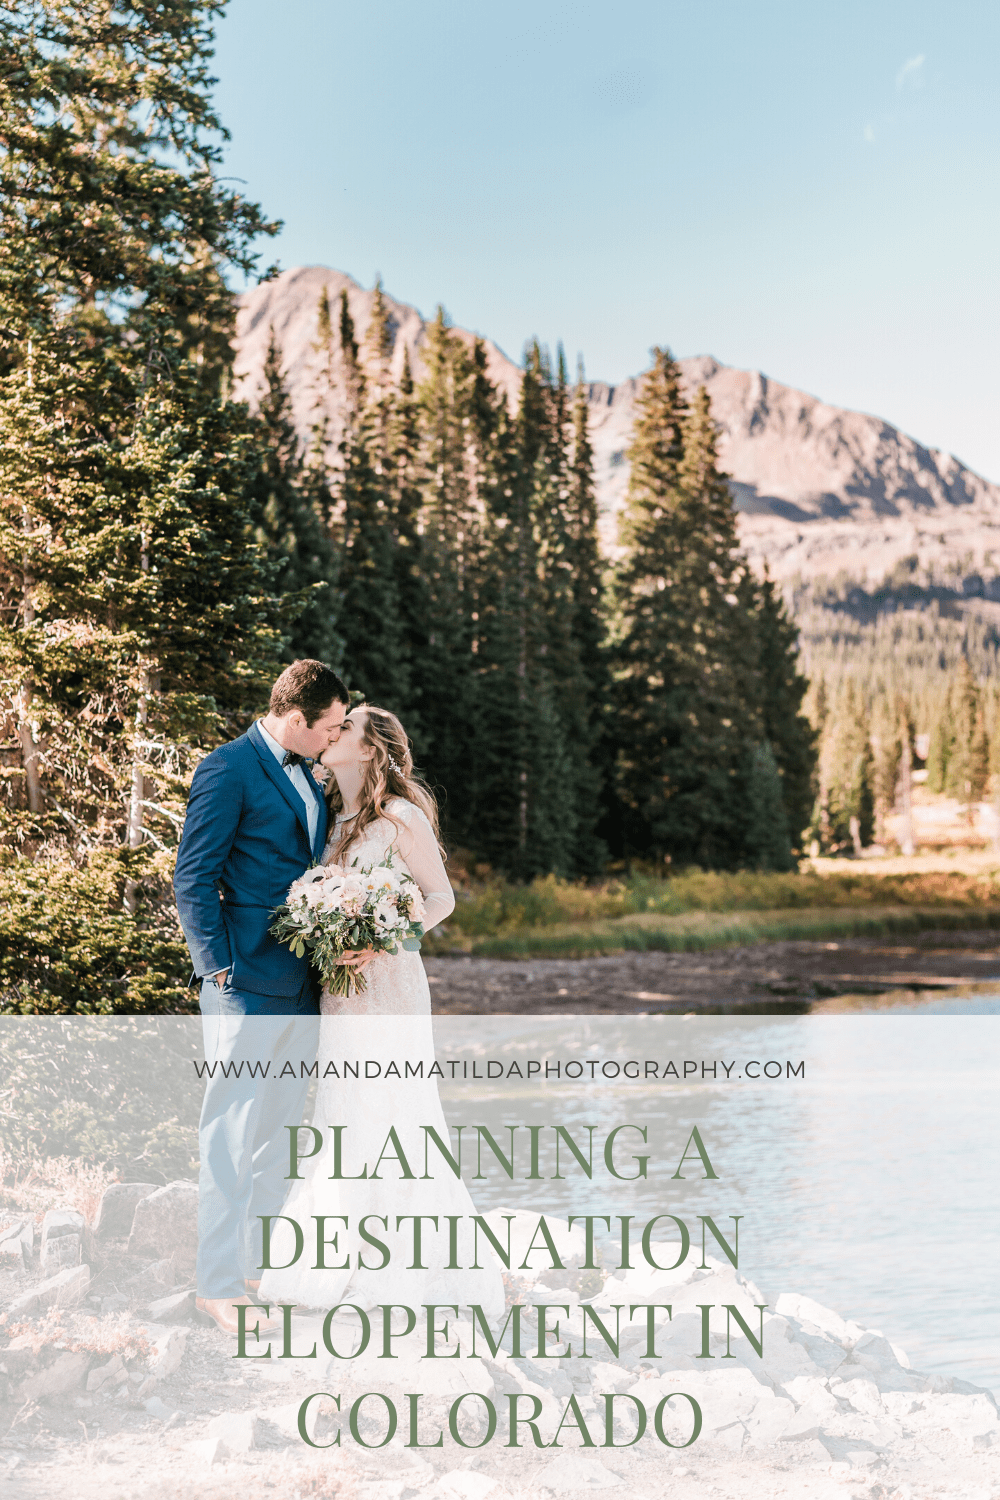 Planning a Destination Elopement in Colorado | Amanda Matilda Photography